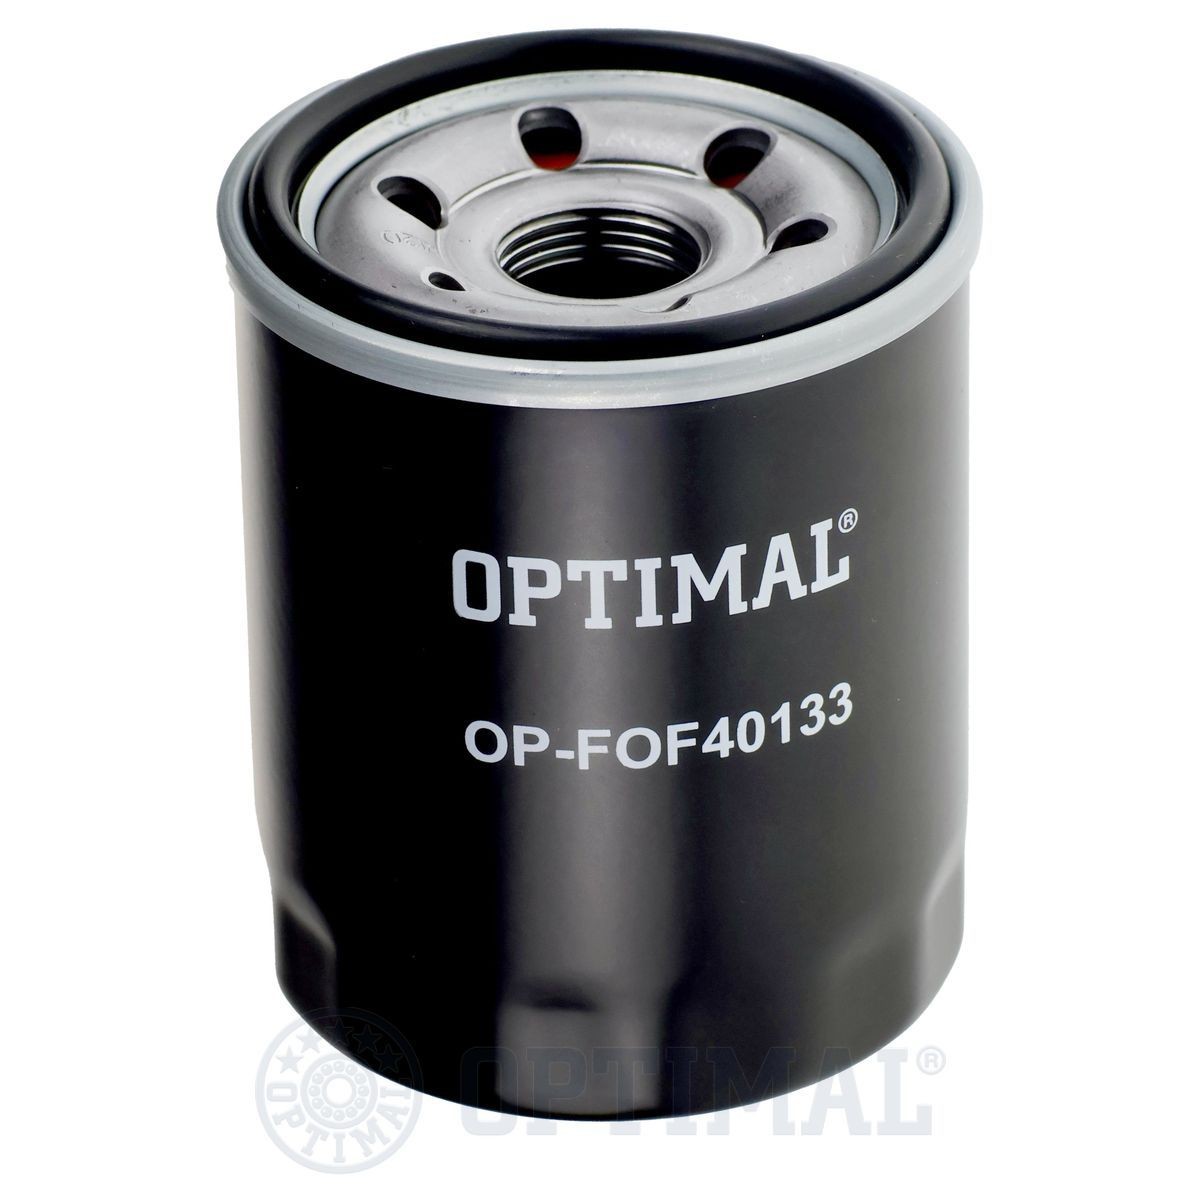 OPTIMAL OP-FOF40133 Oil filter S26300-02503